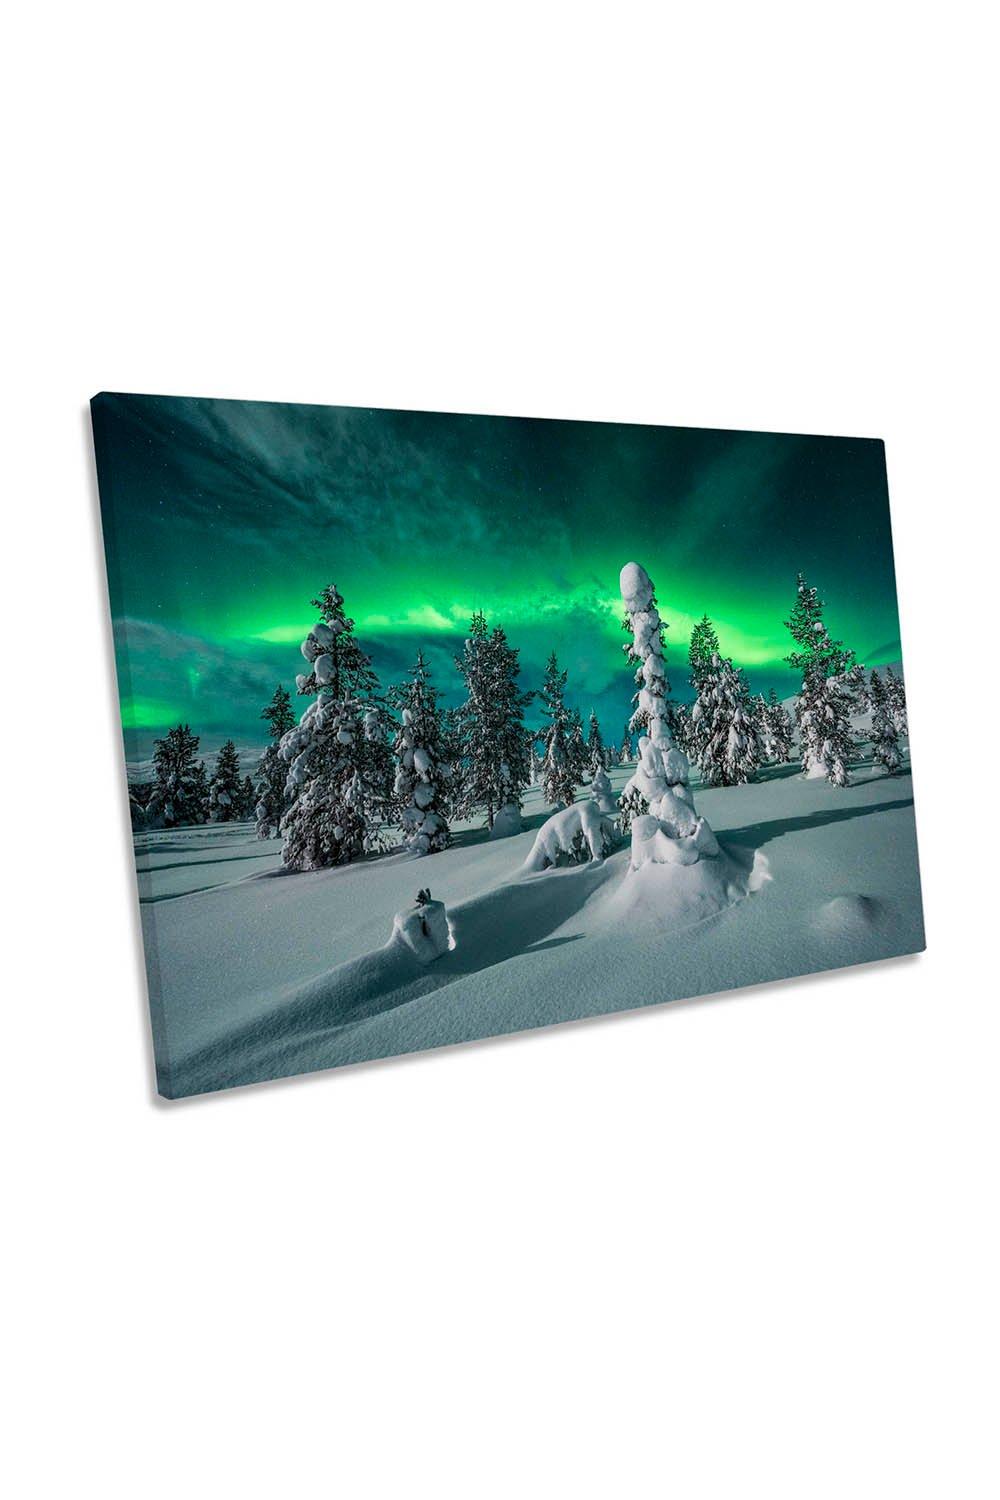 Polar Night Green Northern Lights Canvas Wall Art Picture Print